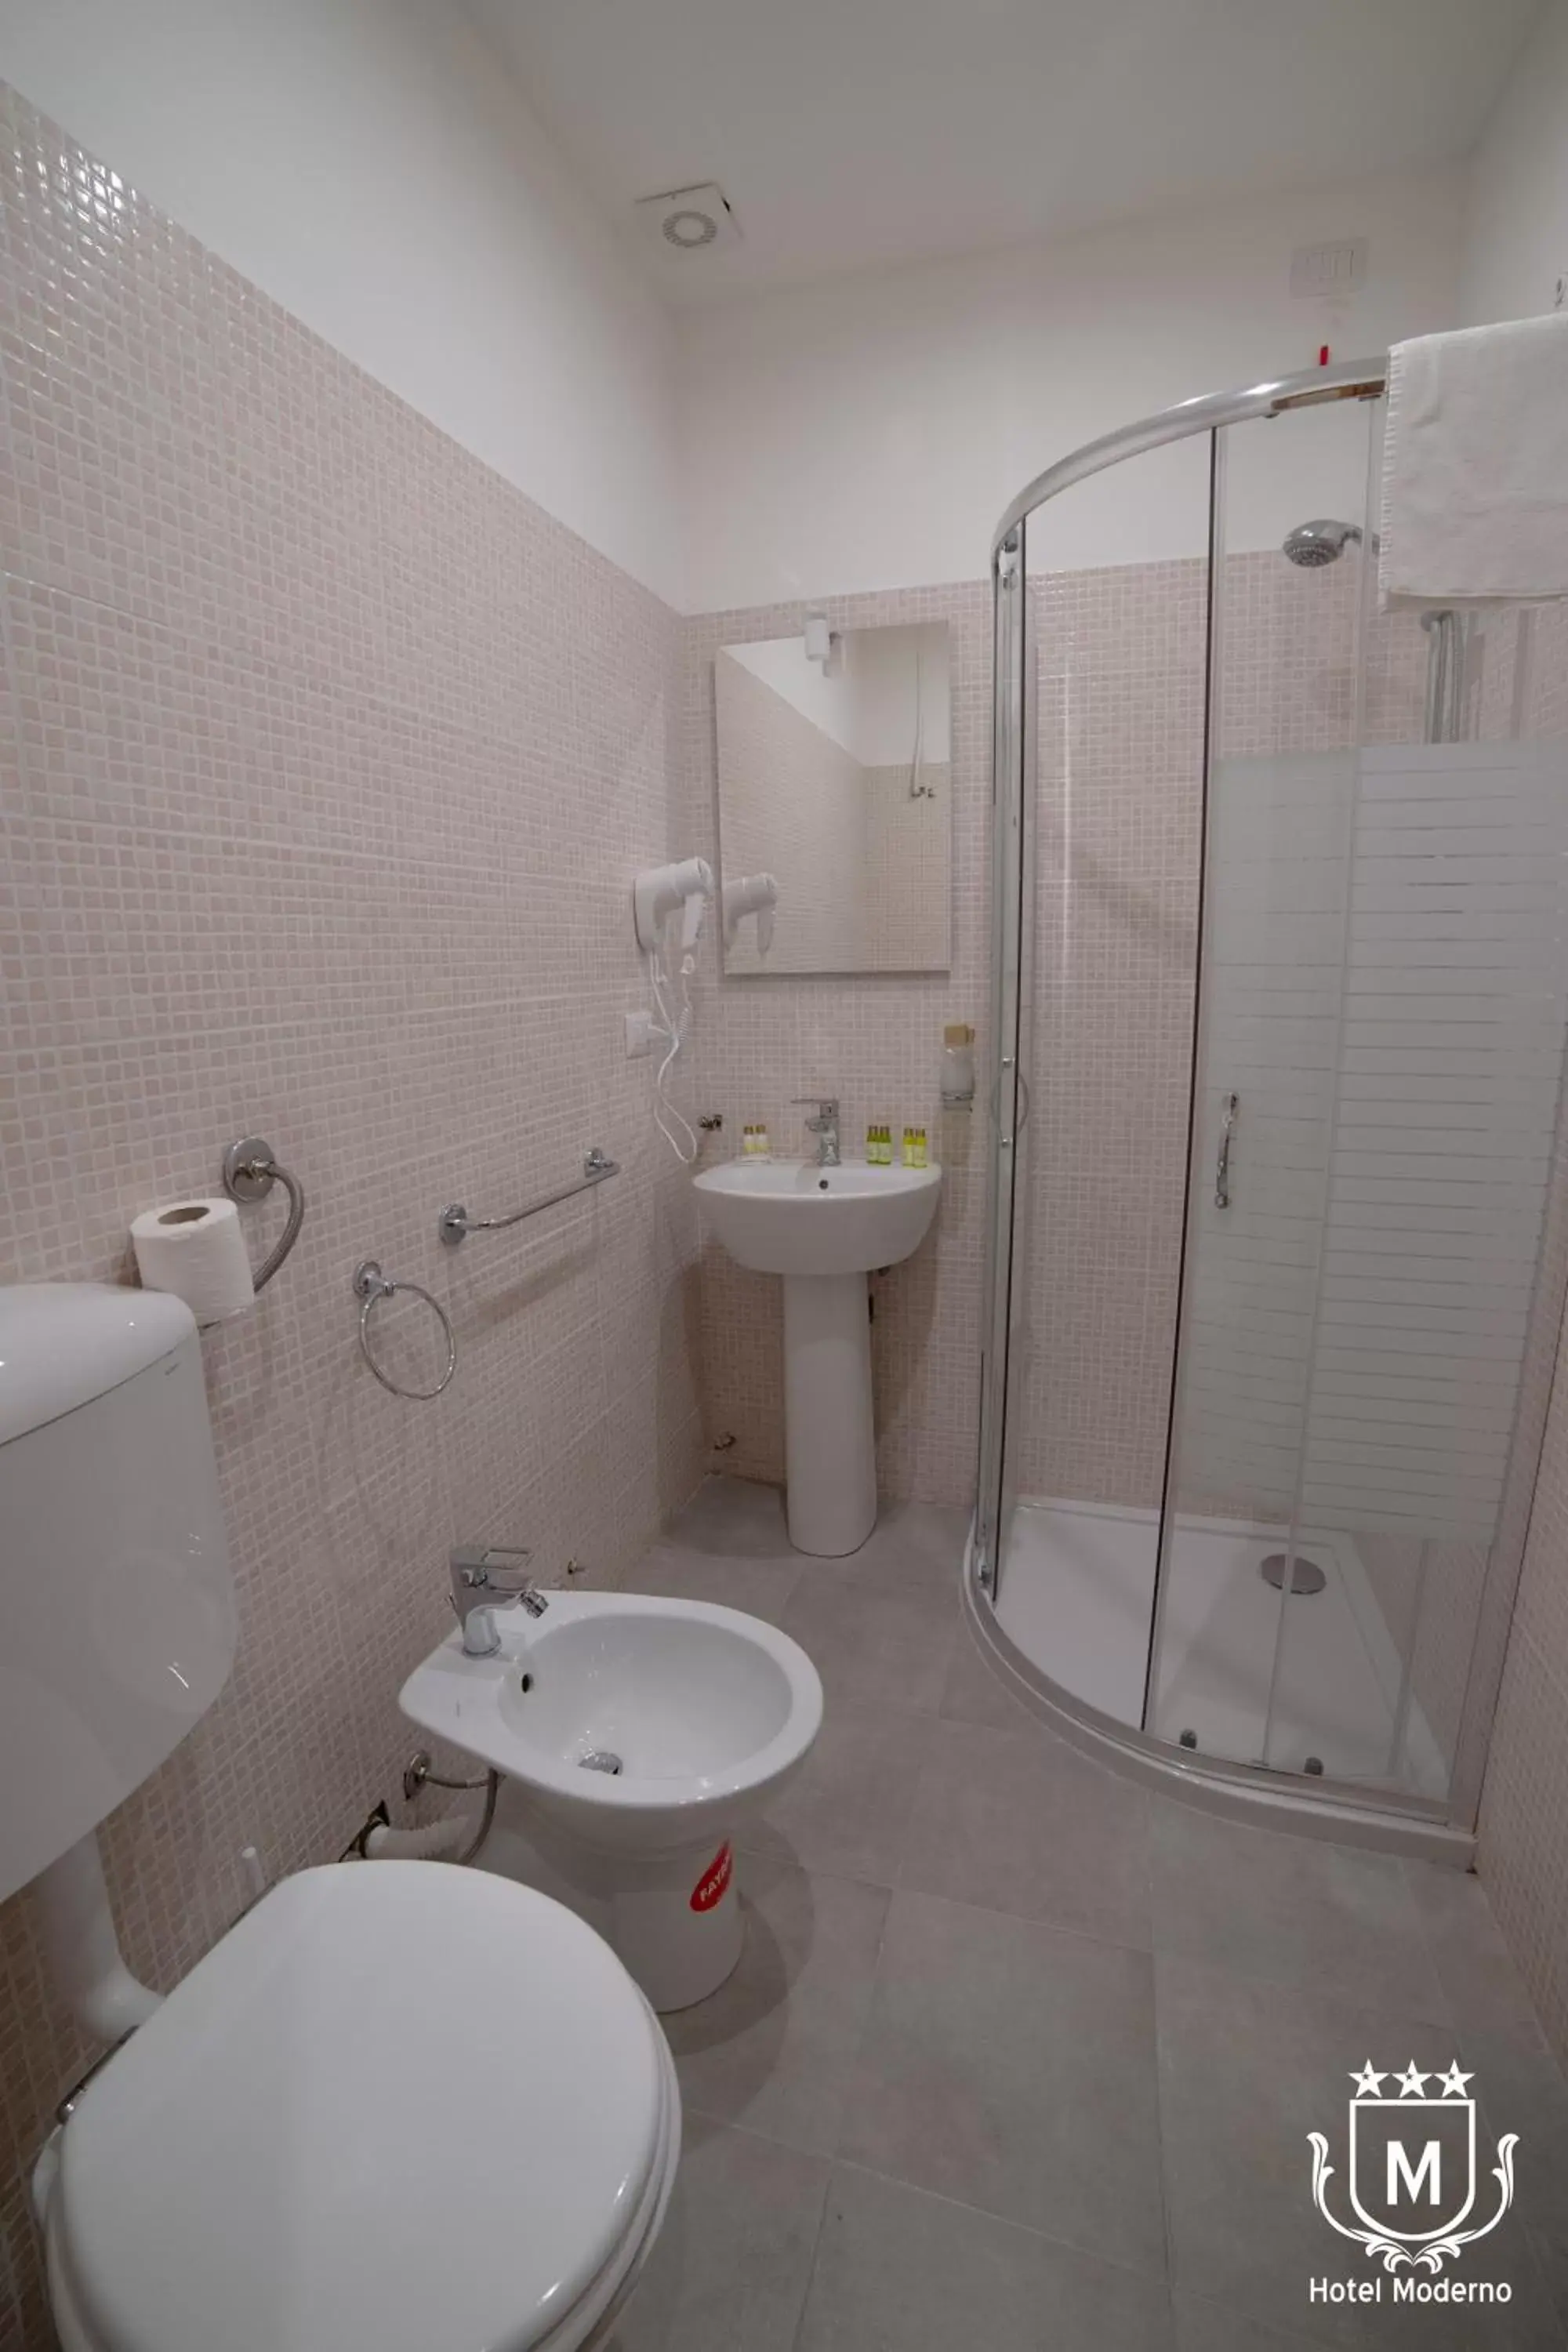 Toilet, Bathroom in Hotel Moderno